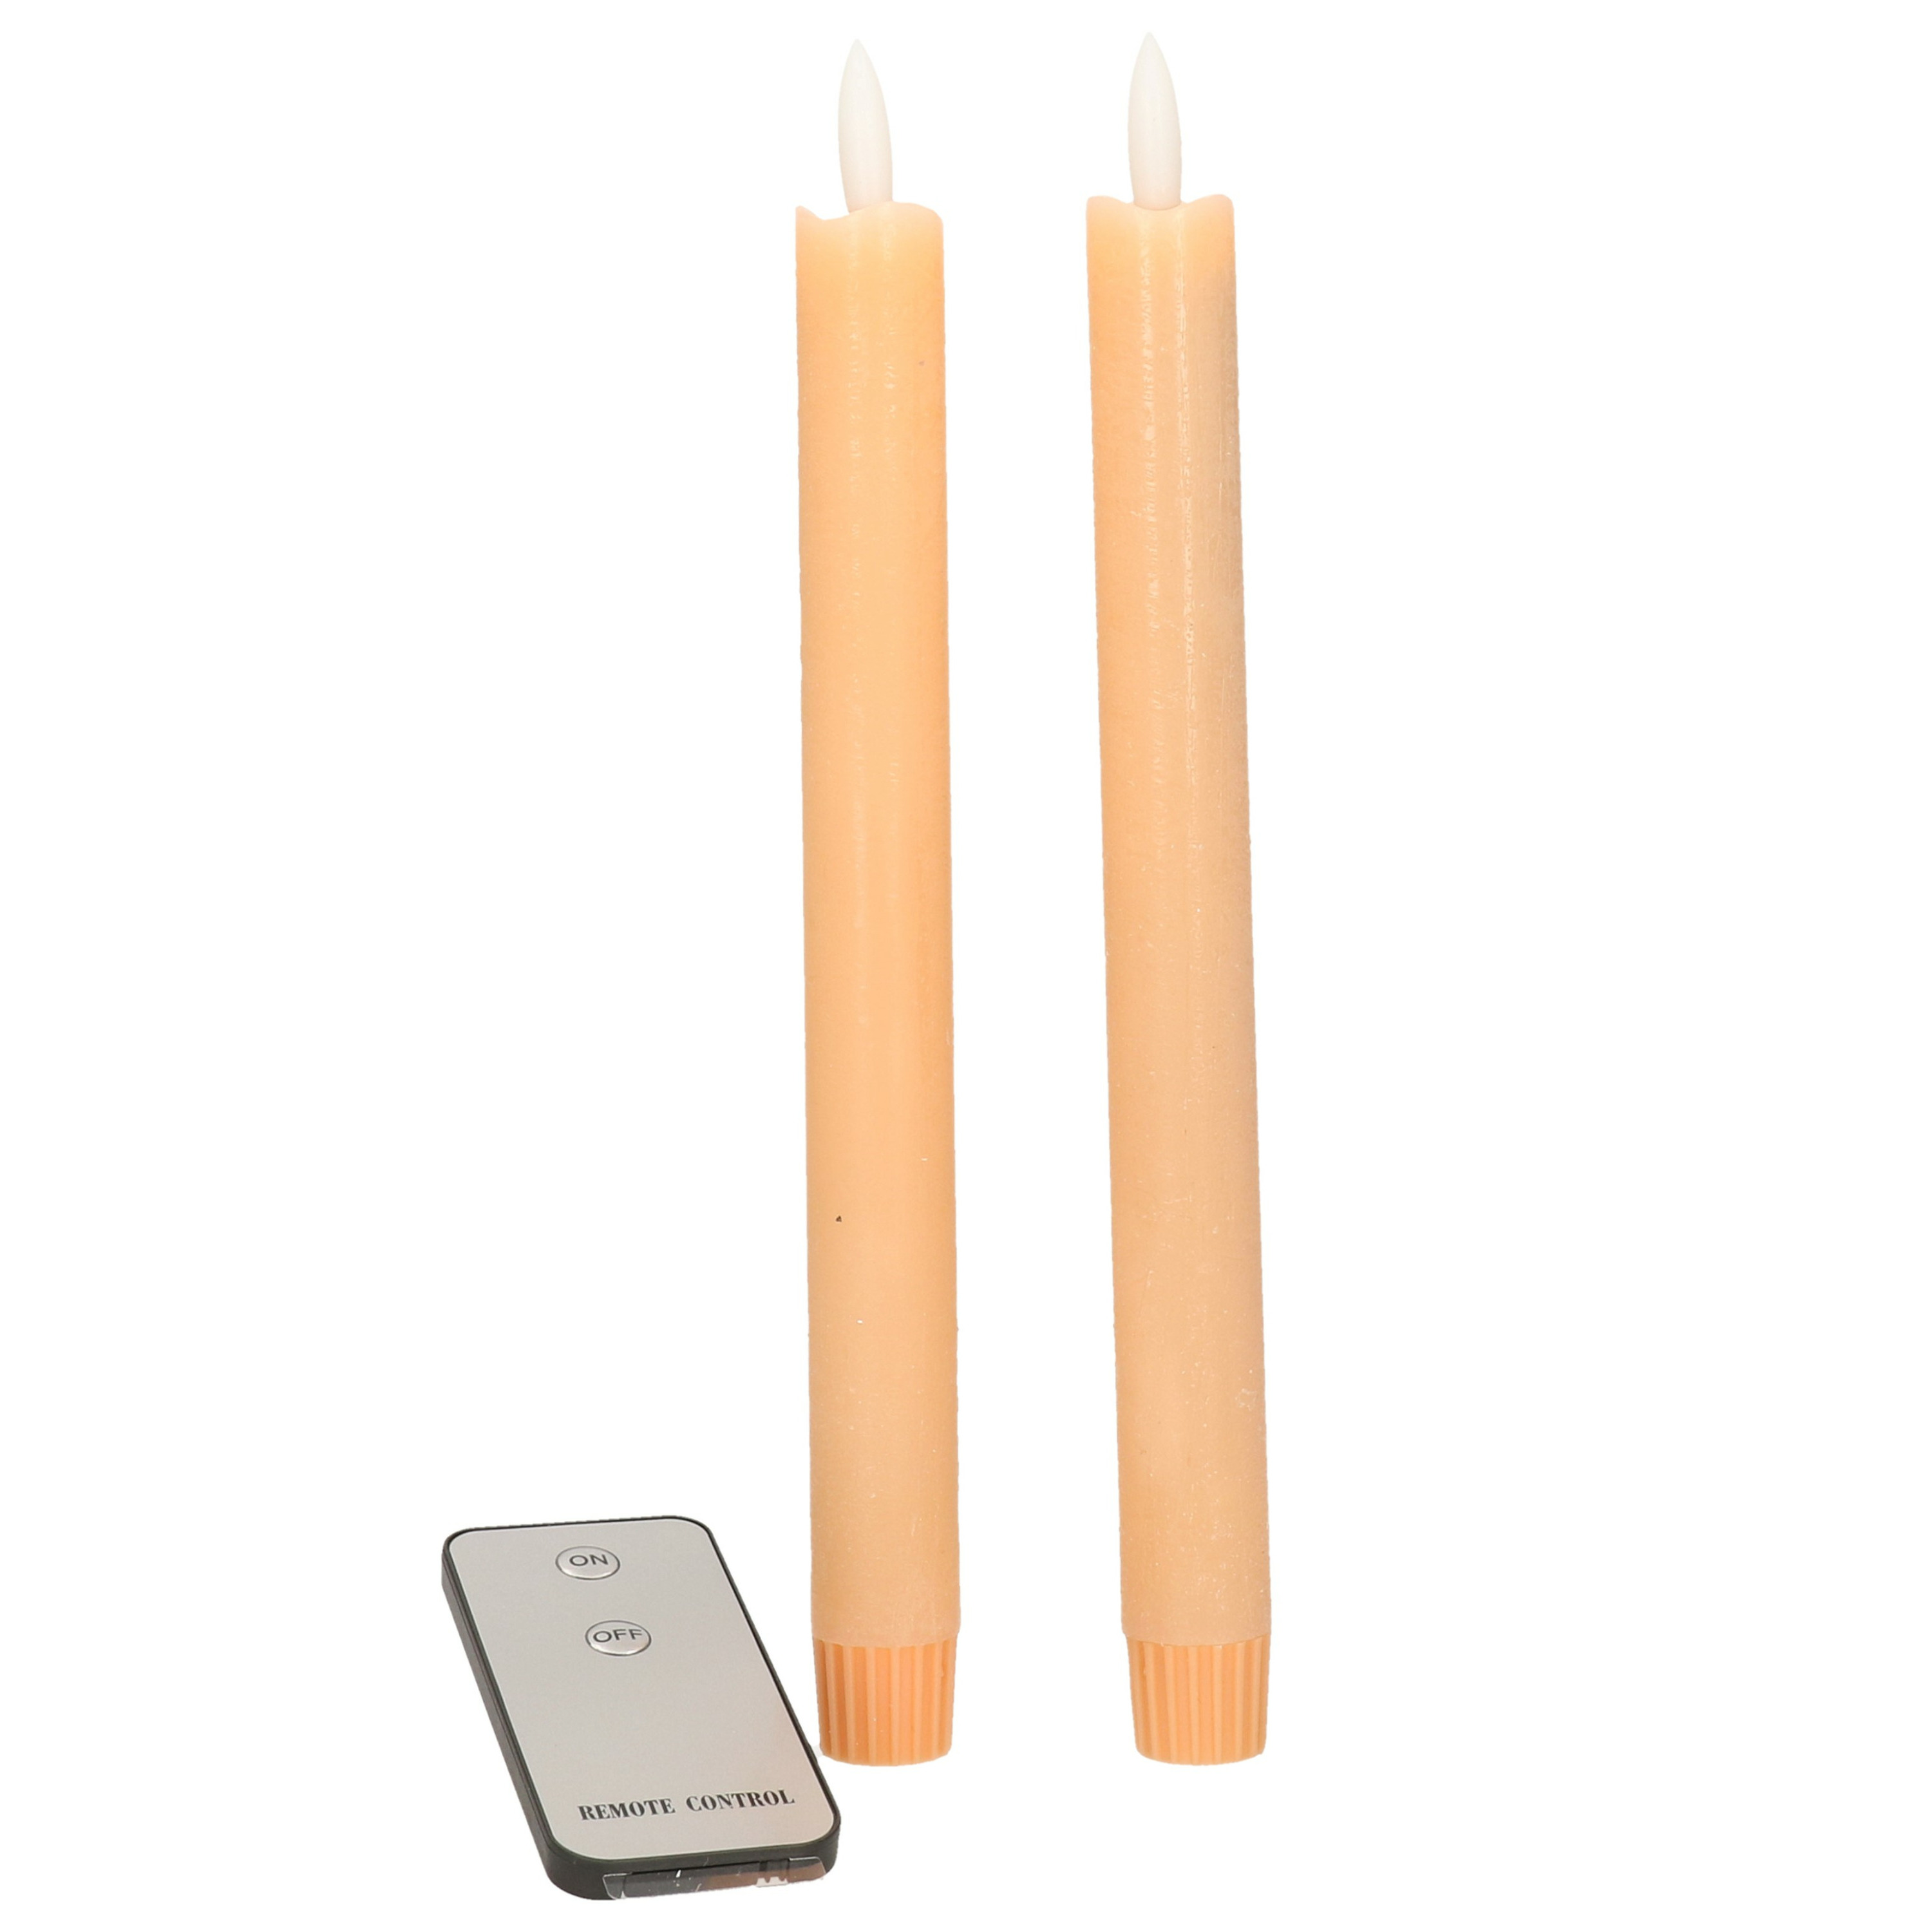 LED dinerkaarsen 2x perzik oranje 23 cm met afstandsbediening